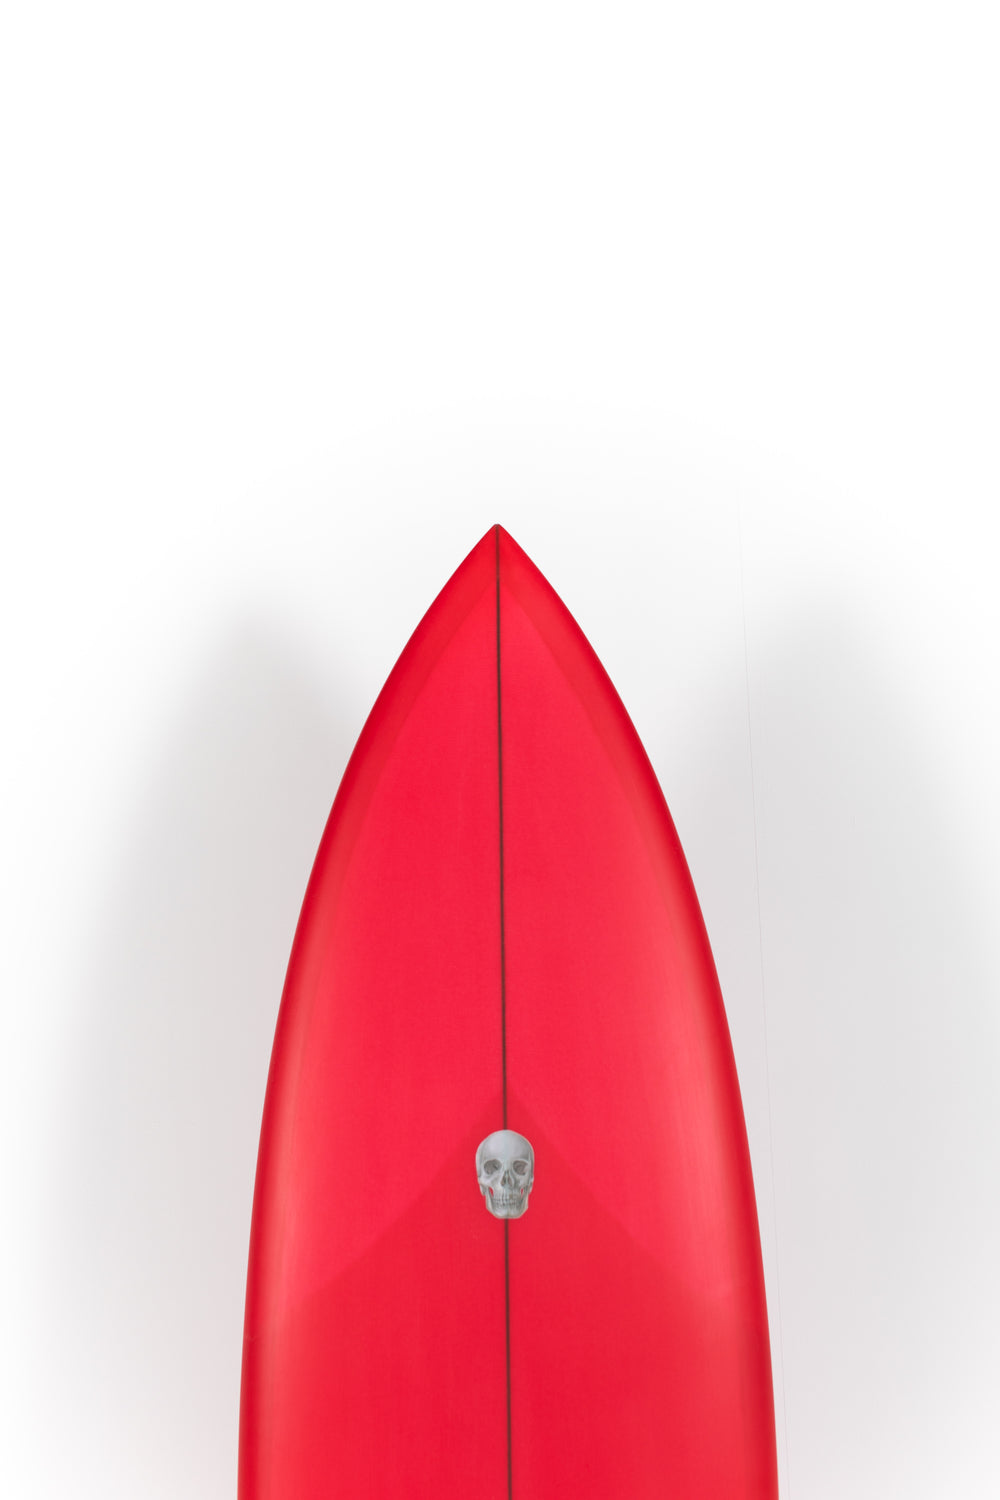 Christenson Surfboards - NAUTILUS - 6'8 x 20 3/4 x 2 5/8 - CX03190 